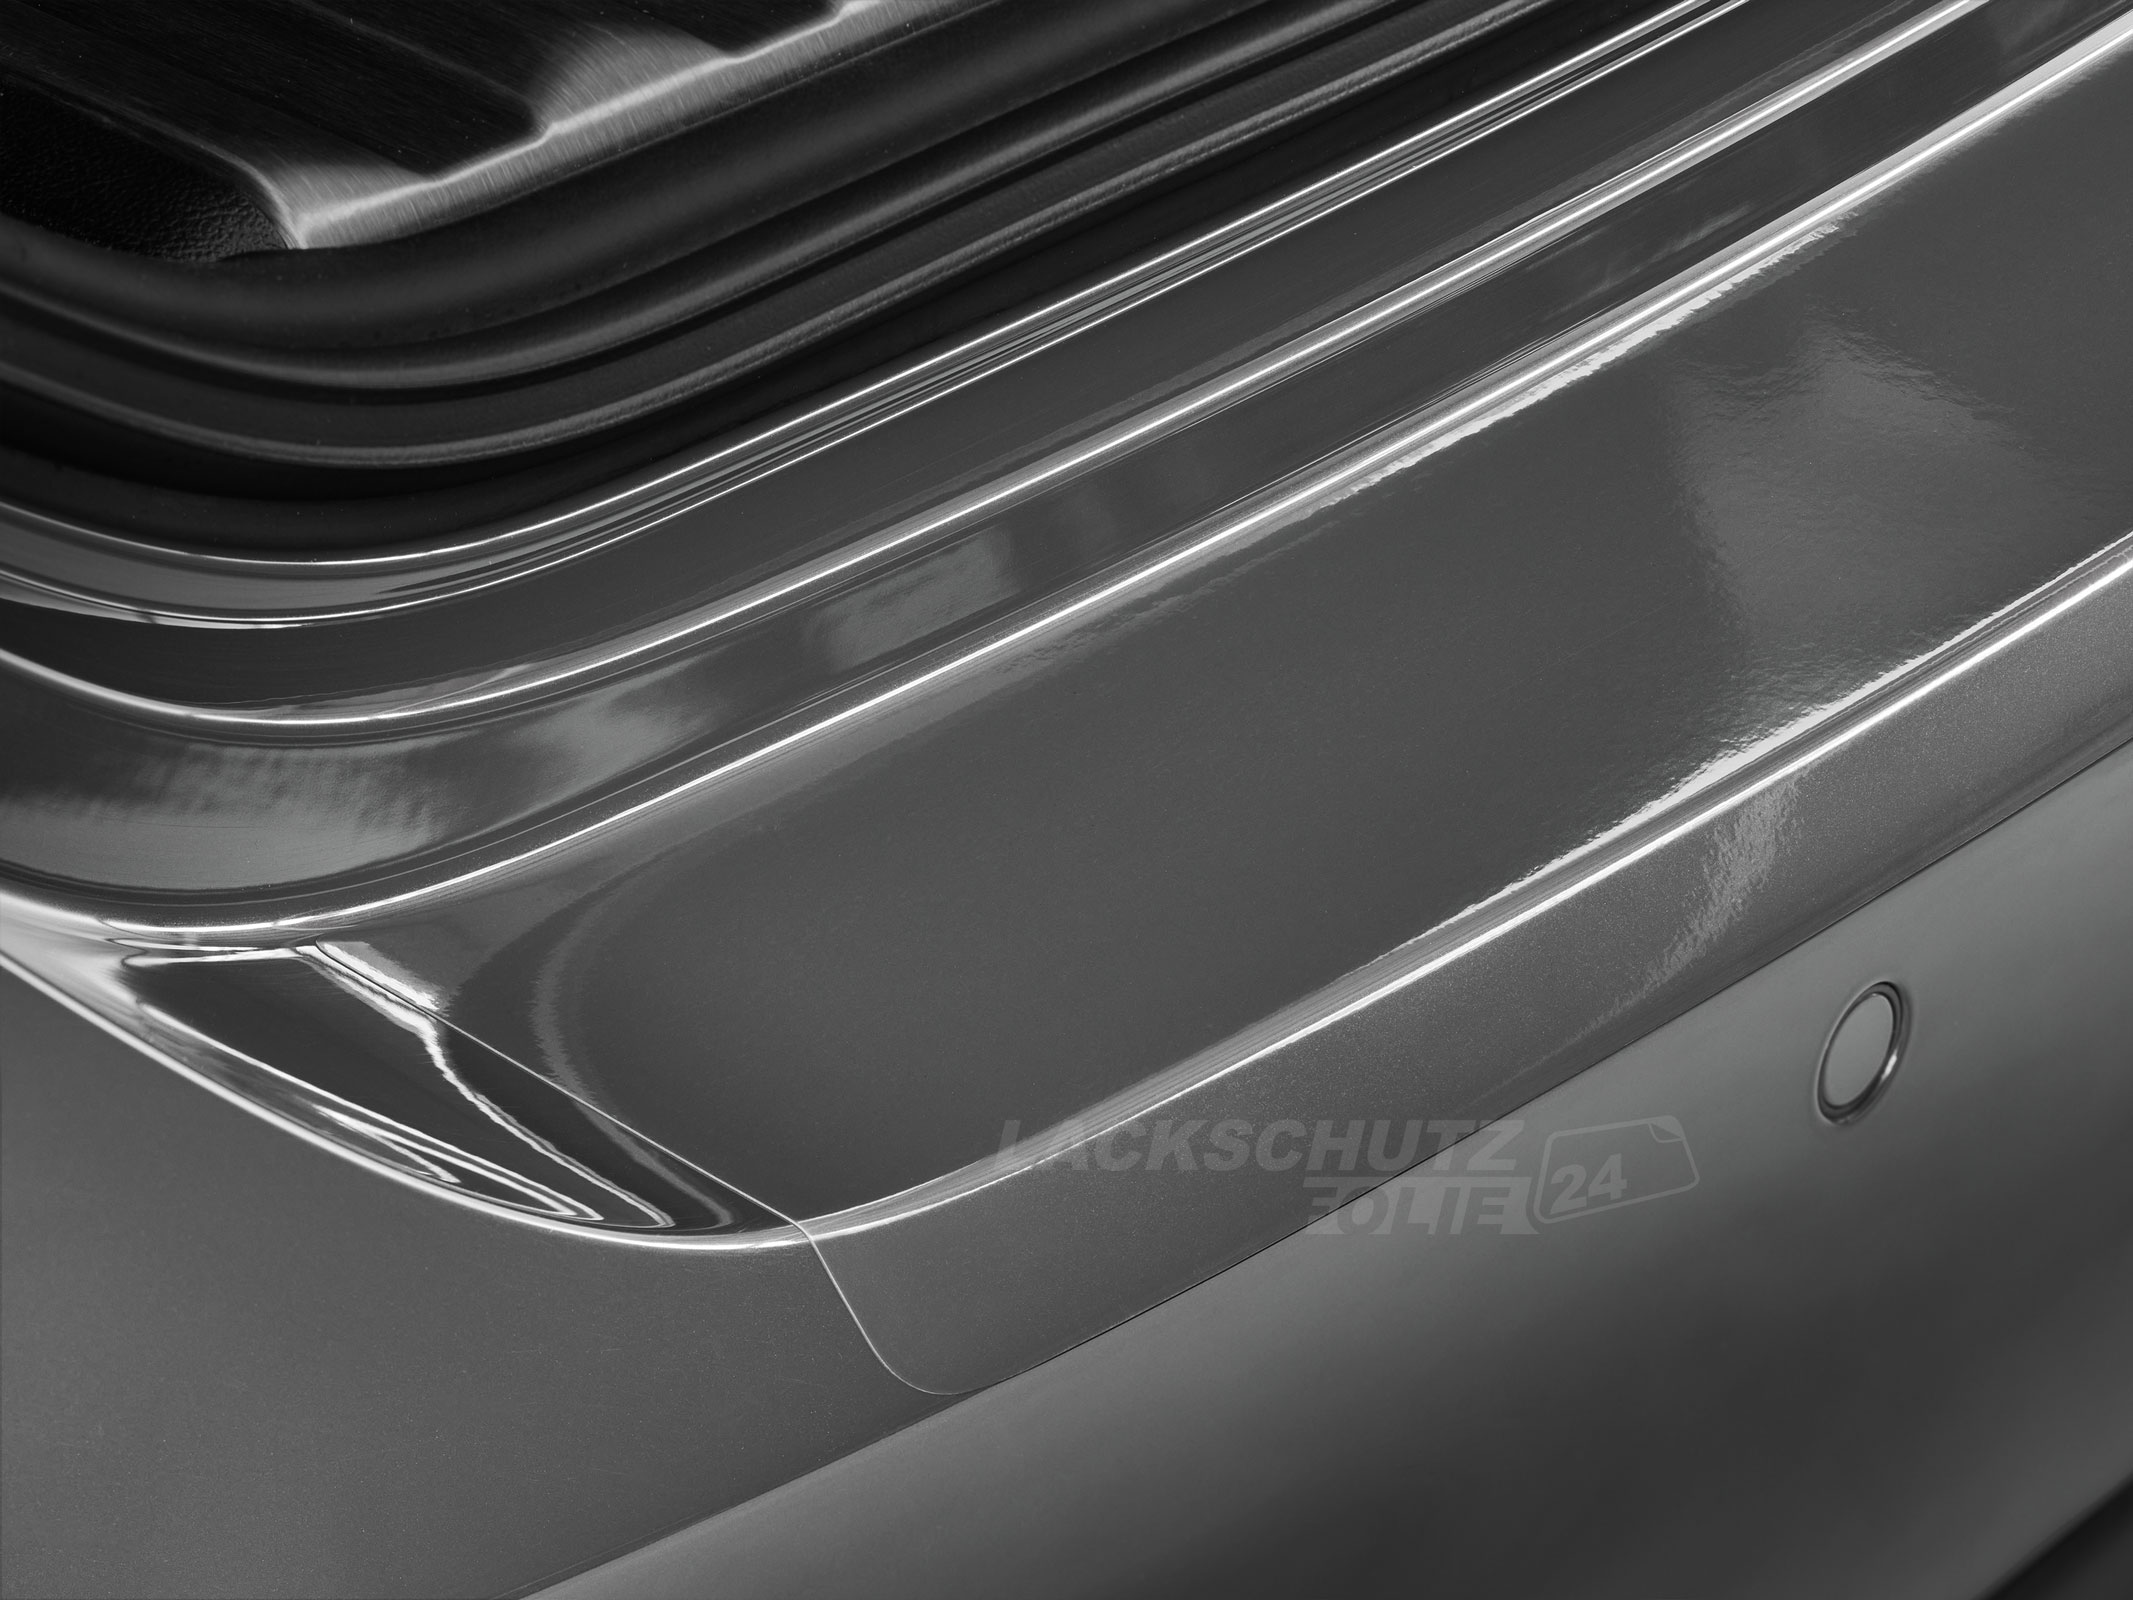 Ladekantenschutzfolie - Transparent Glatt Hochglänzend 240 µm stark für Opel Astra GTC Typ H, BJ 2005-2010